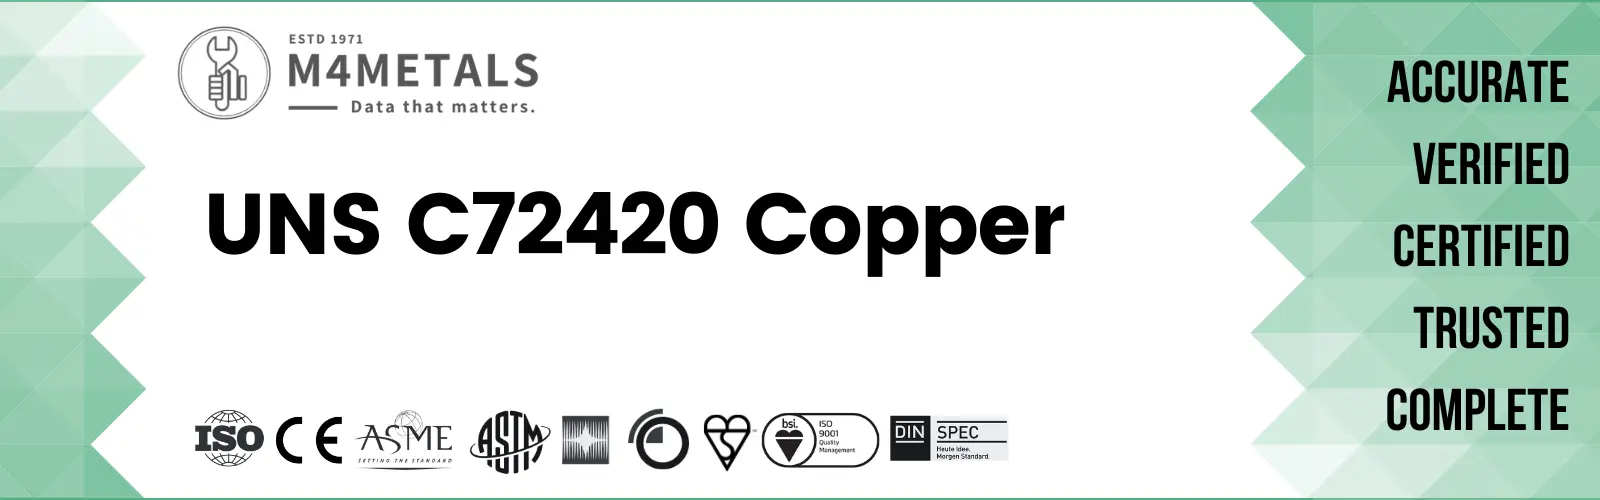 UNS C72420 Copper